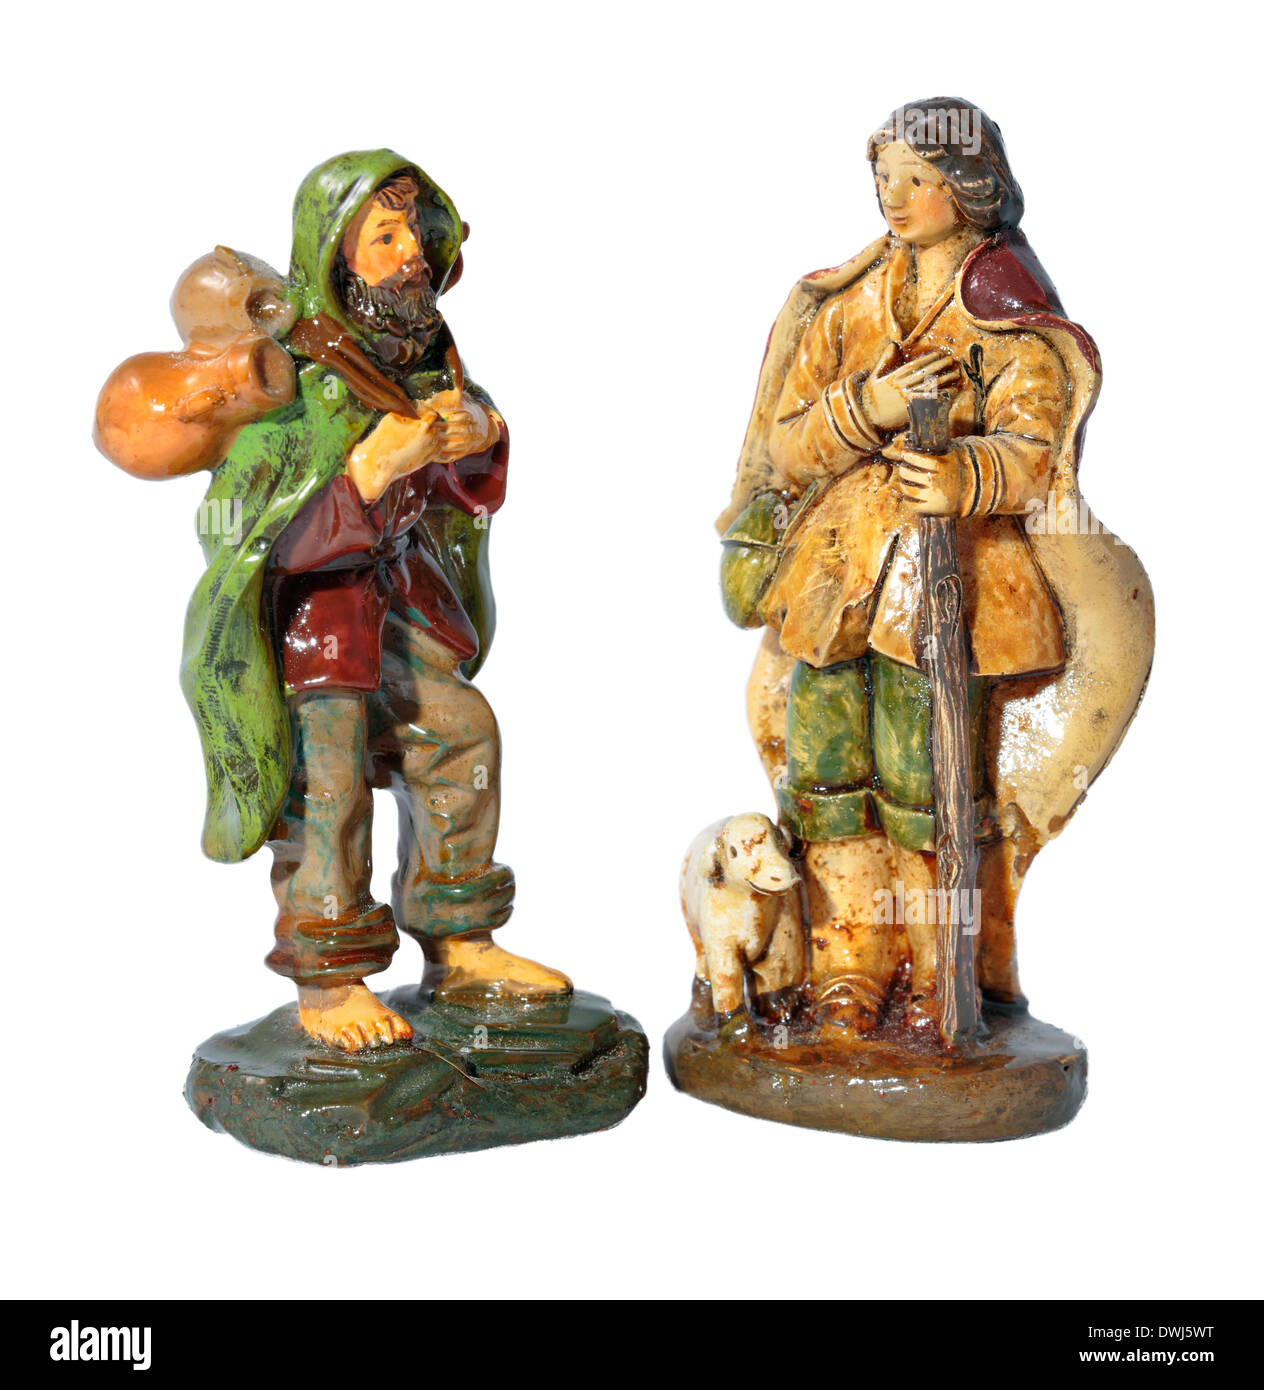 Shepherd and peasant, Christmas terra cotta figurine (presepi), Naples, Italy, on white background Stock Photo